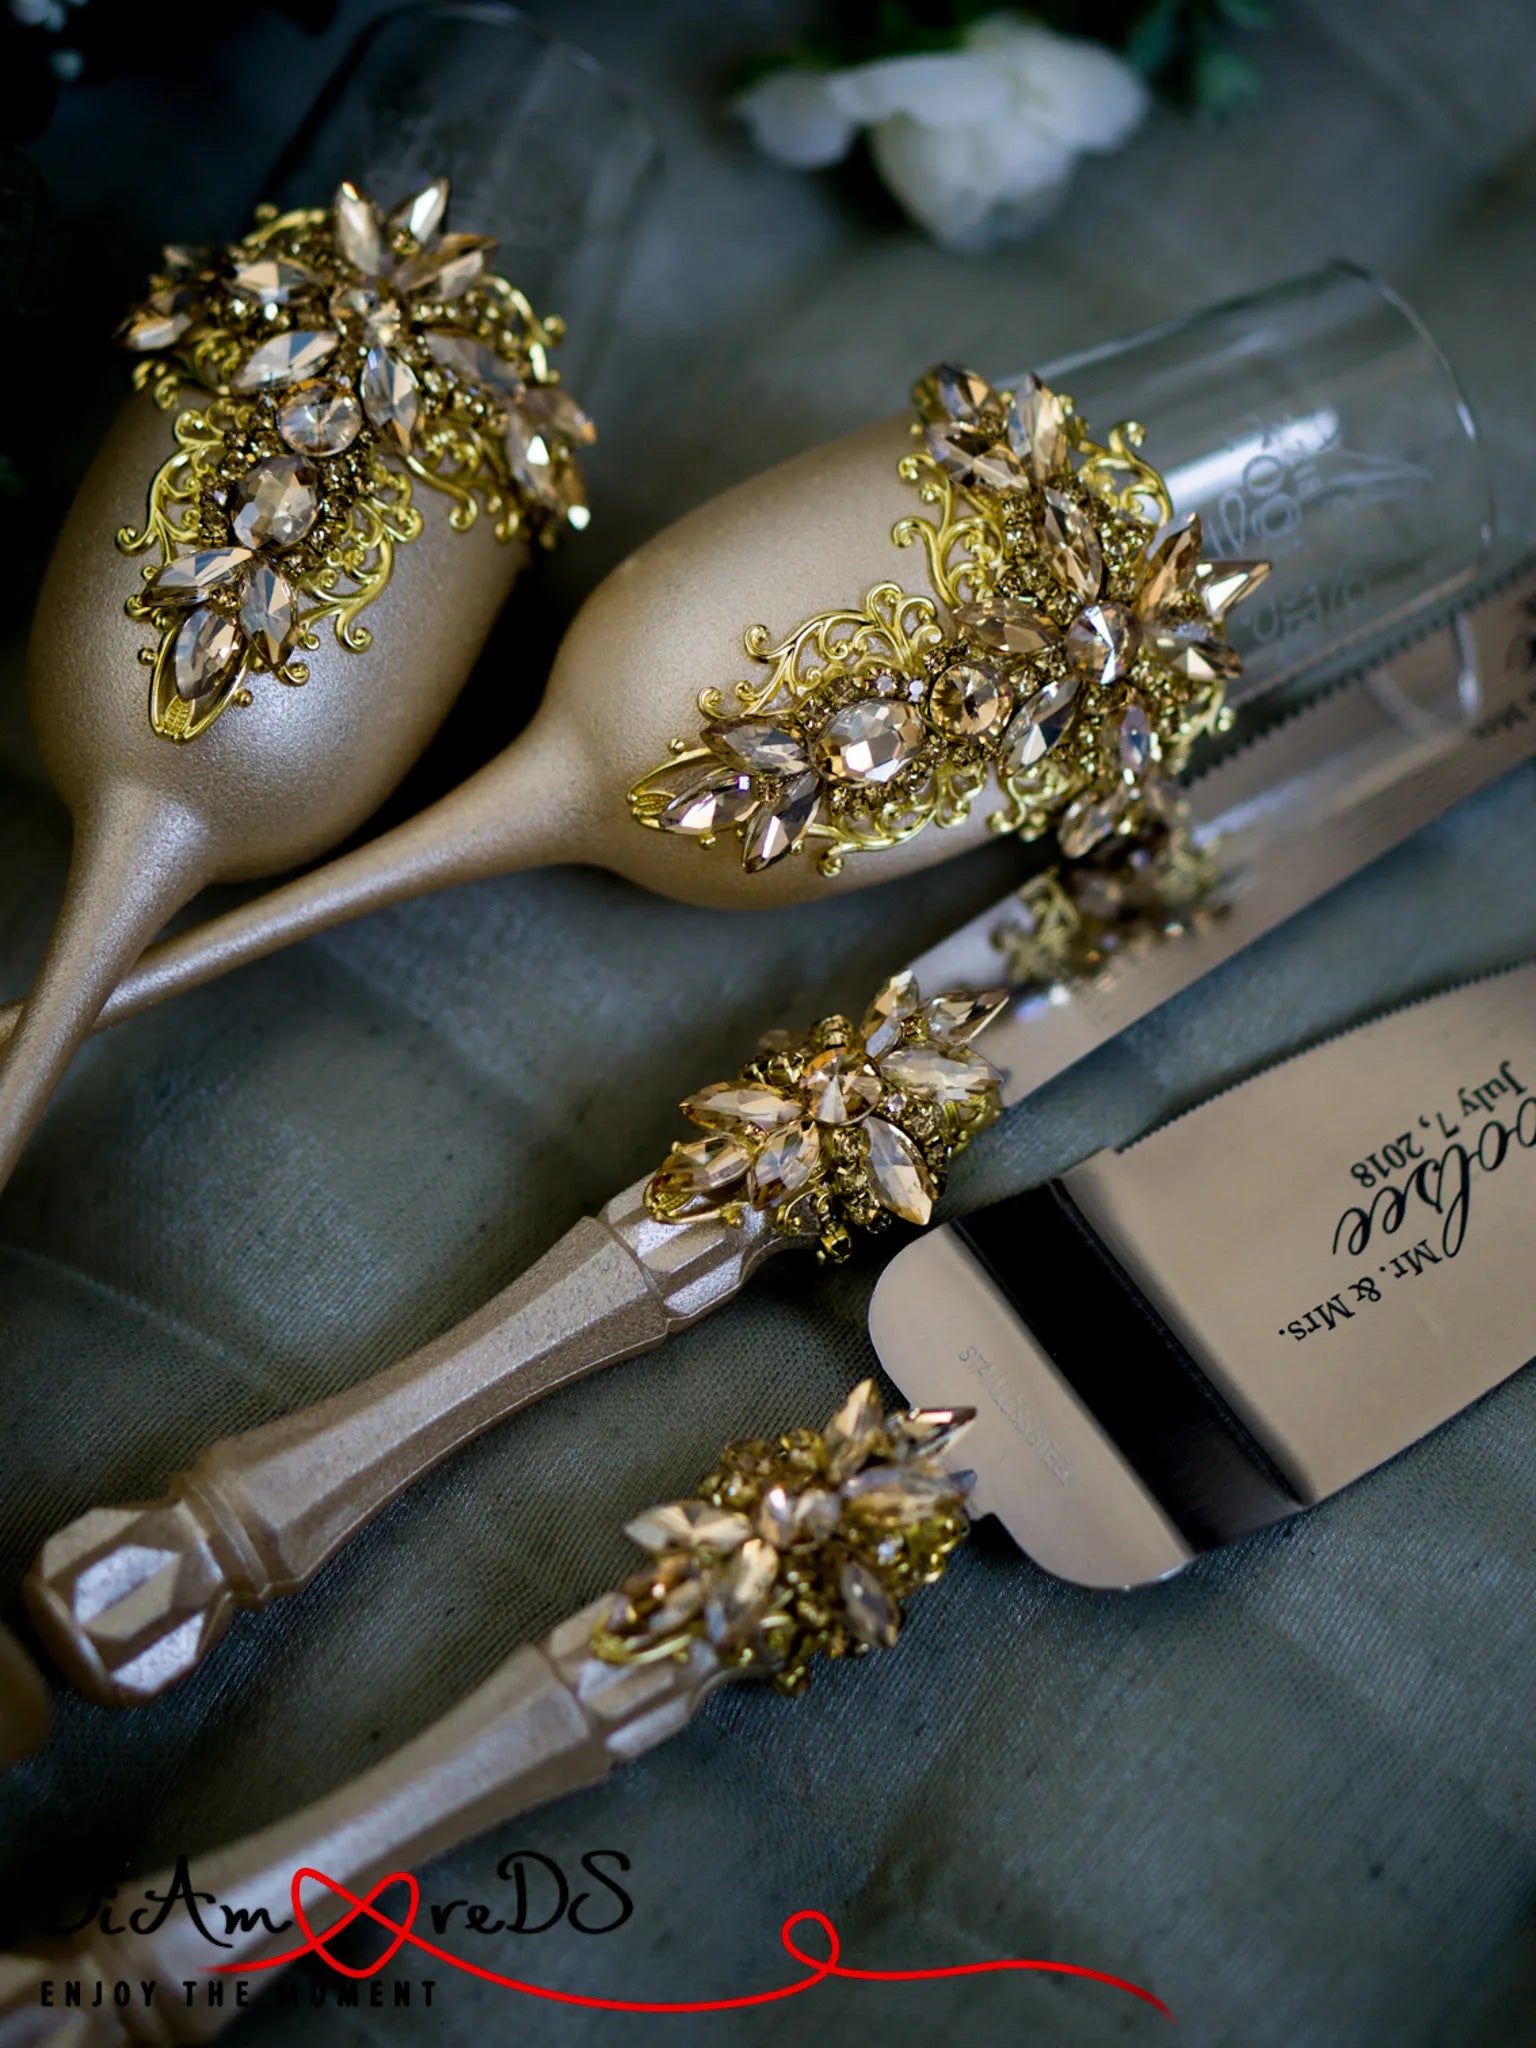 Special occasion dessert utensils in gold